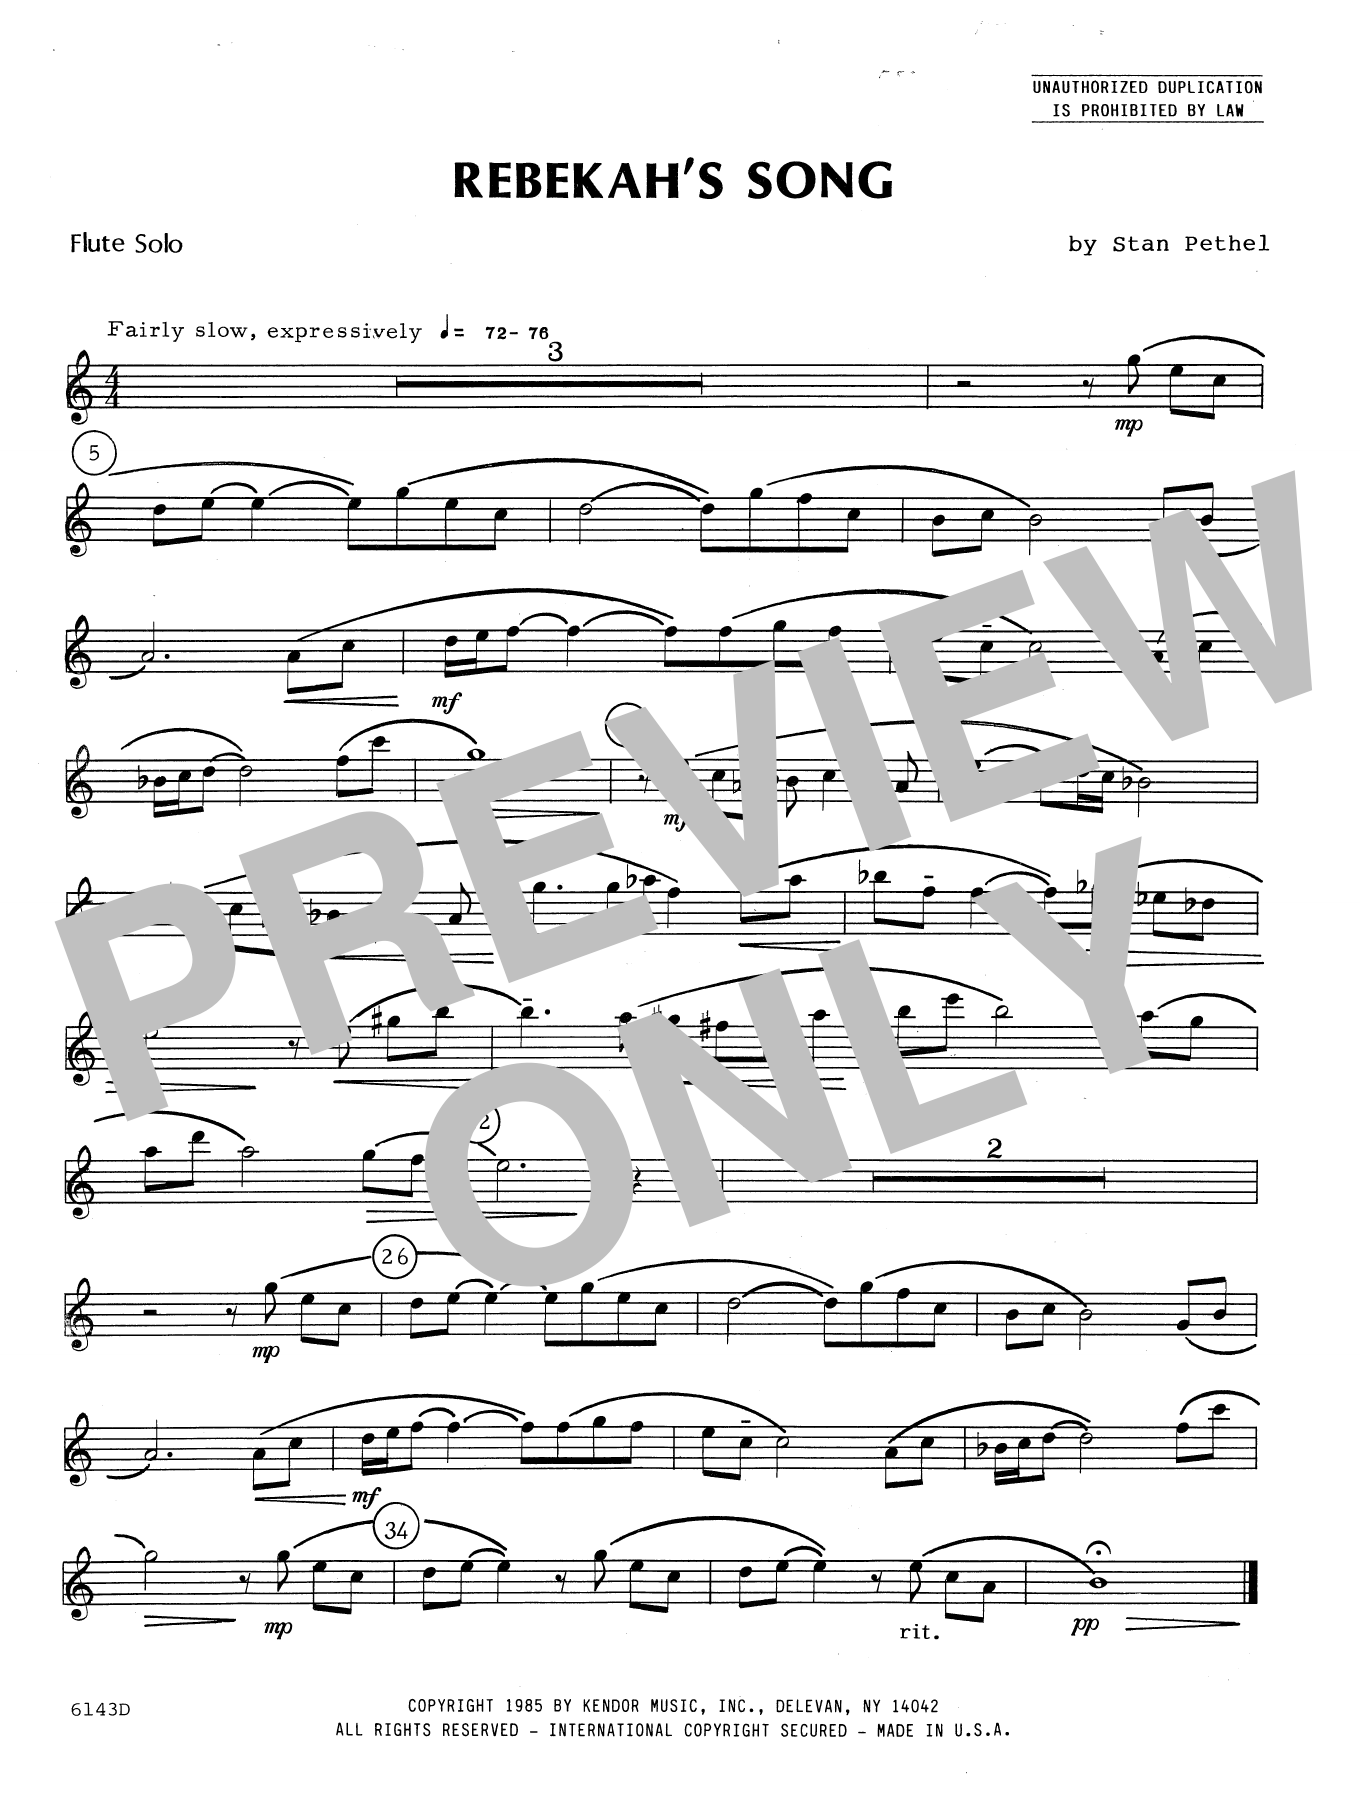 Download Stan Pethel Rebekah's Song - Flute Sheet Music